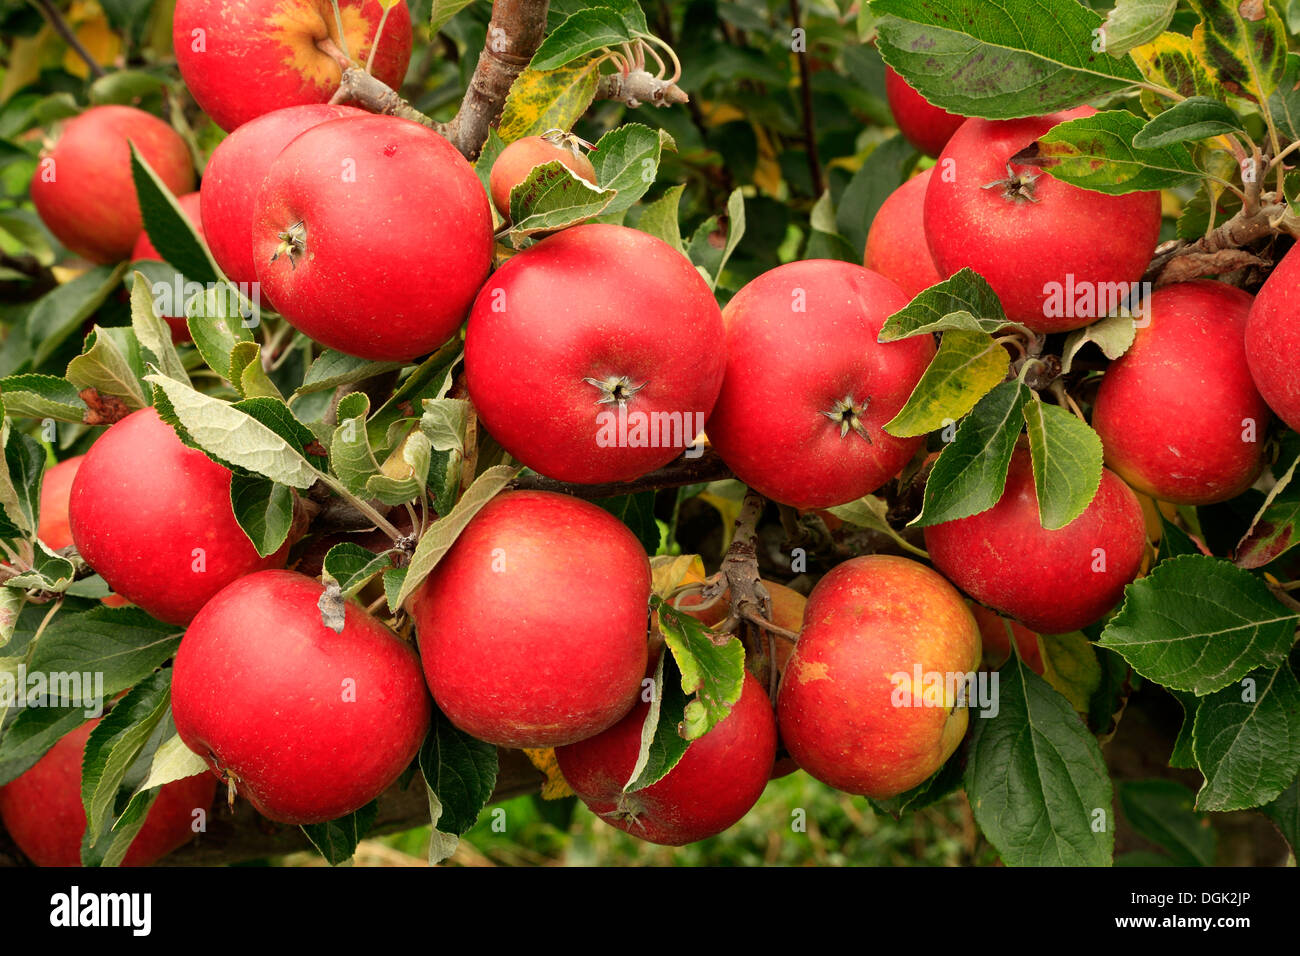 Apple 'Cox's Orange Pippin', malus domestica apples variety varieties growing on tree Stock Photo